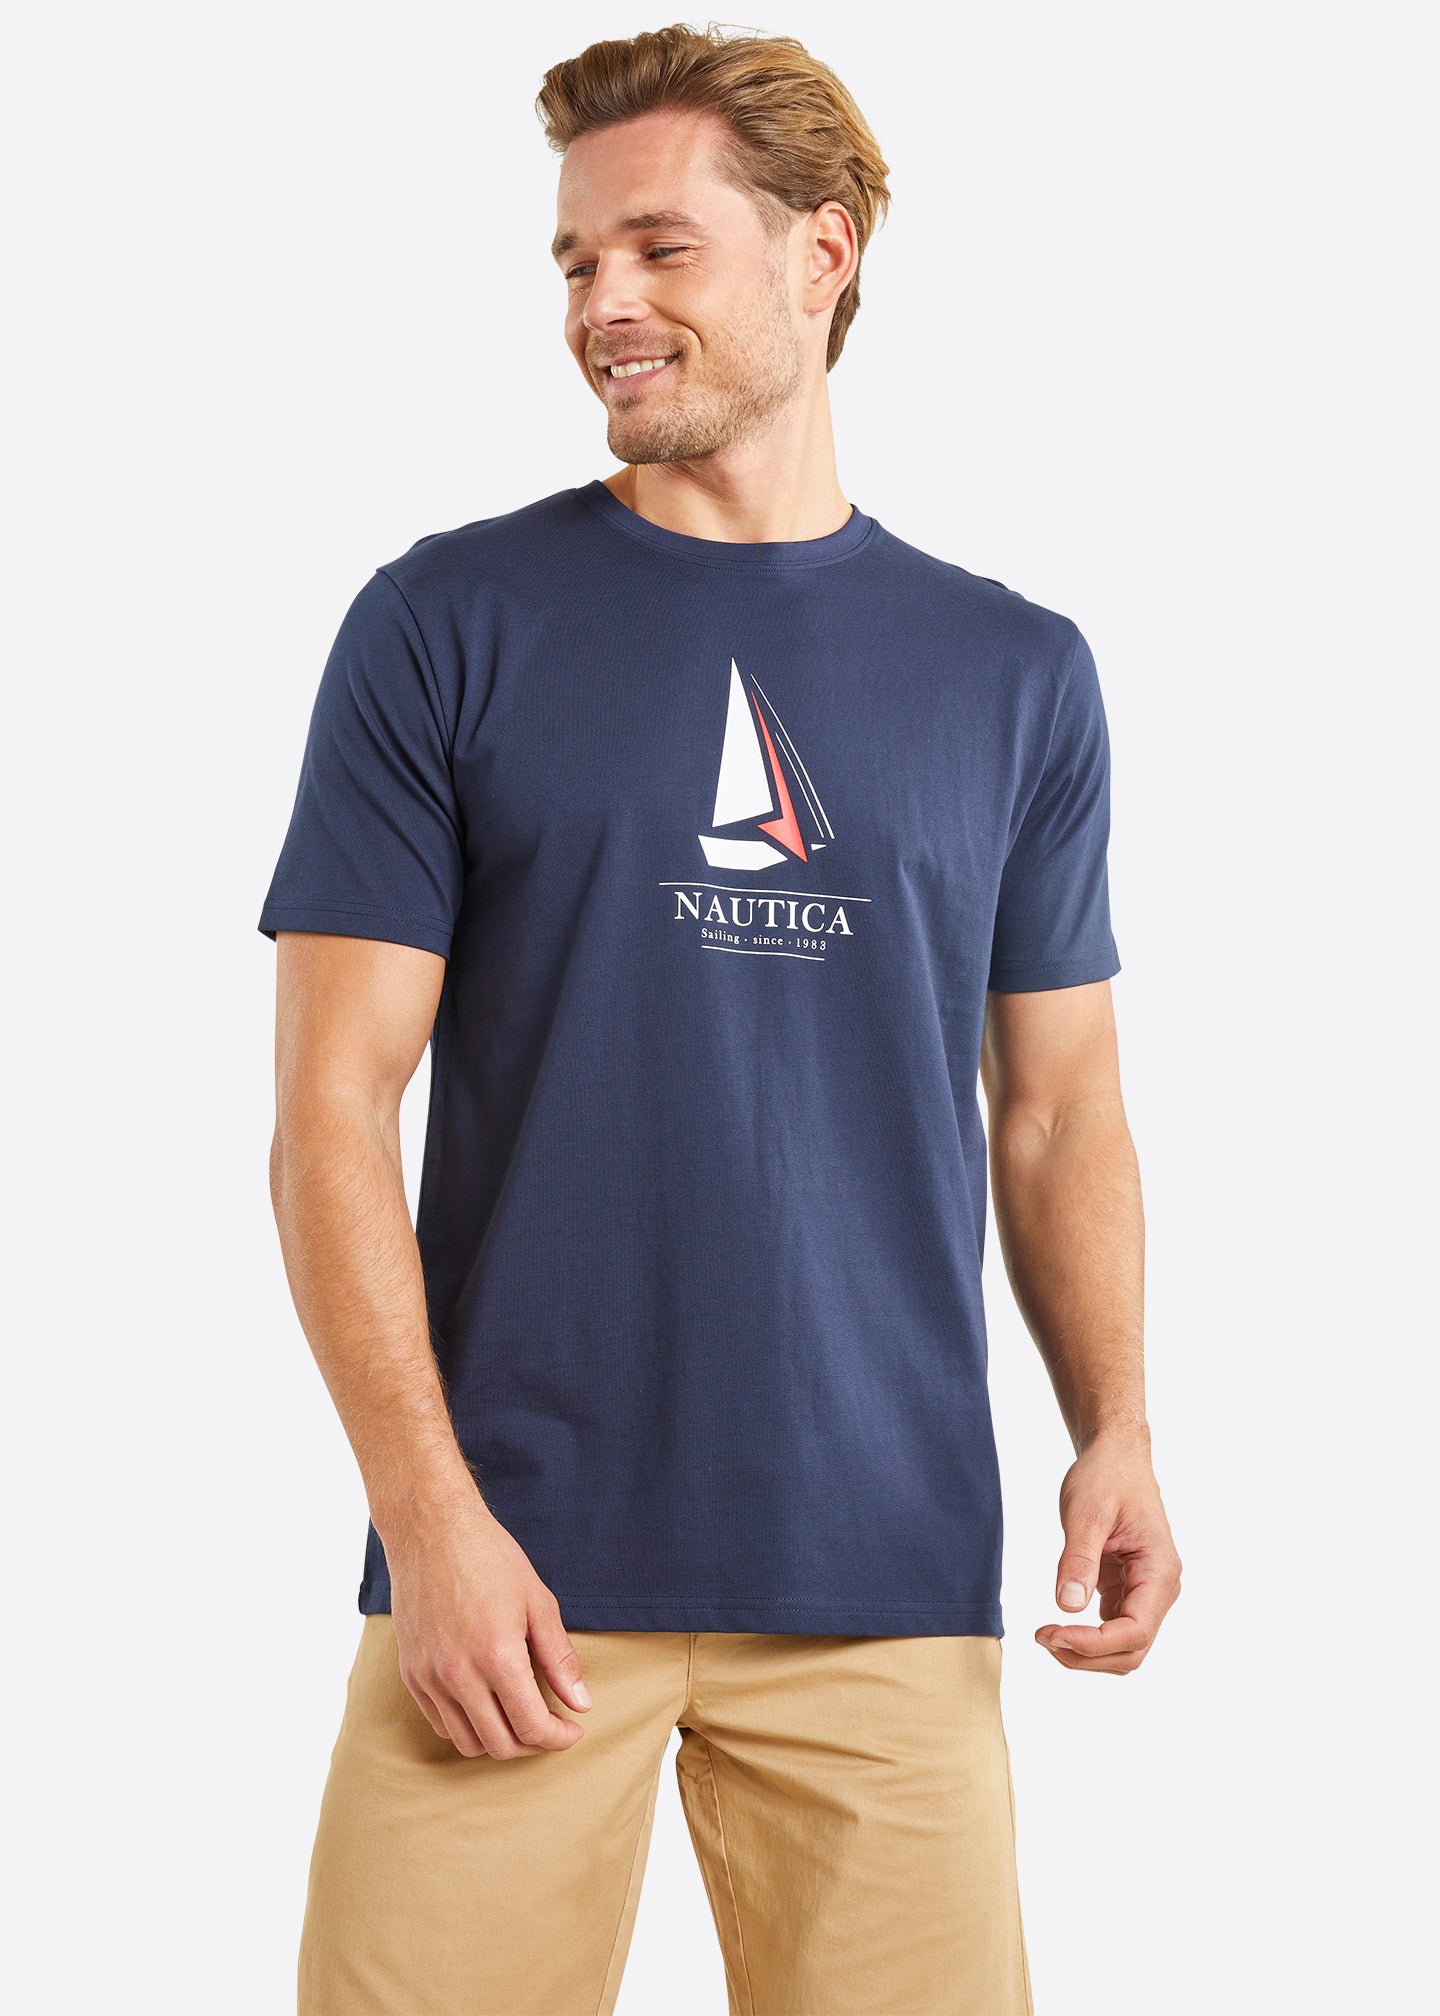 Nautica Mens T Shirts & Tees for Men